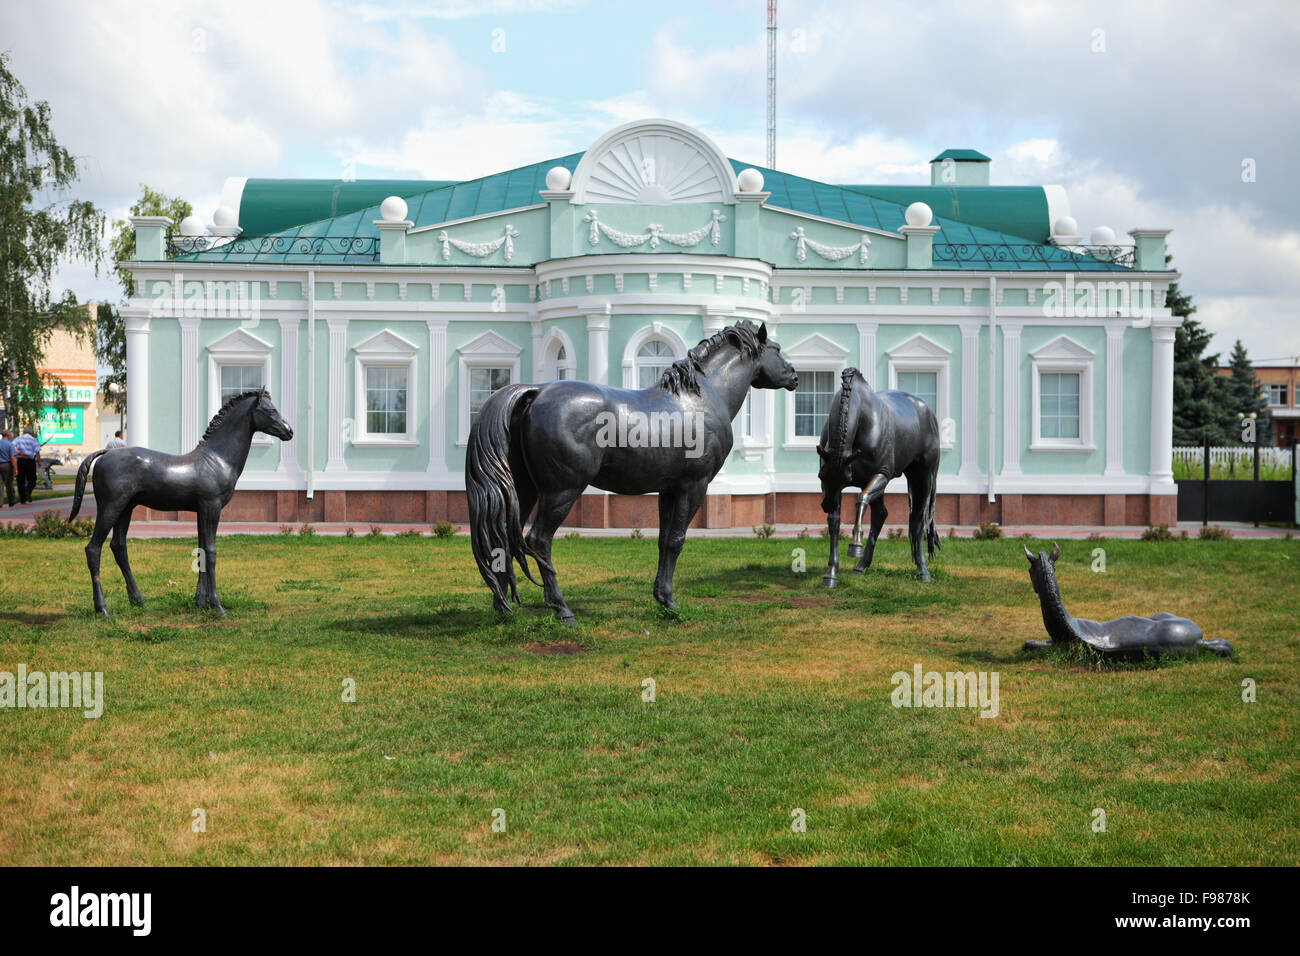 Horses sculpture lifesize in fibreglass Stock Photo